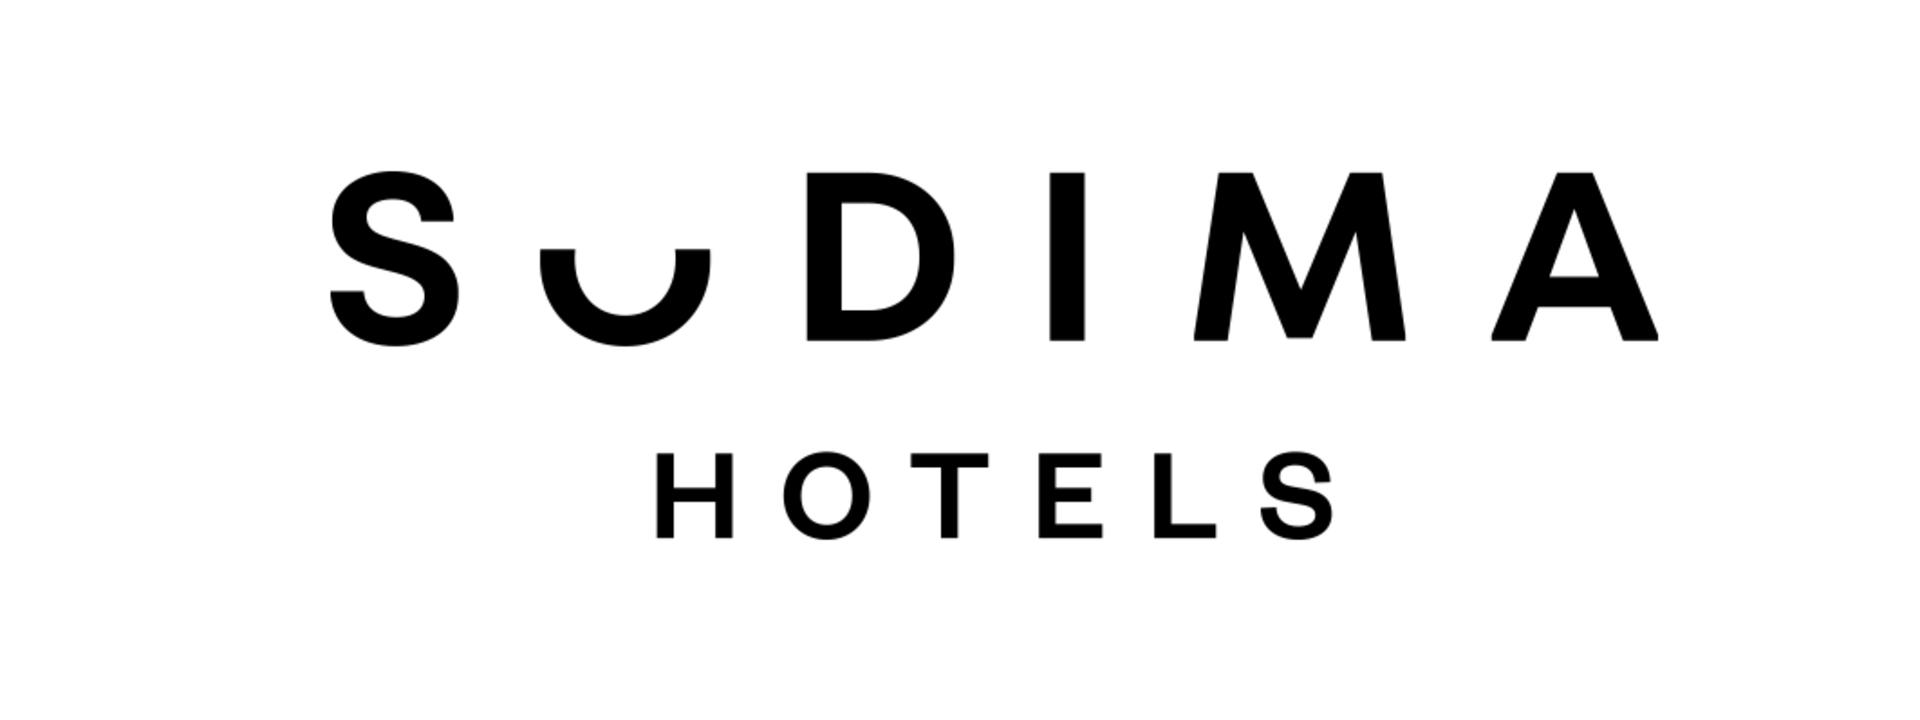 sudima-hotels-master-black-jpeg_5.jpg